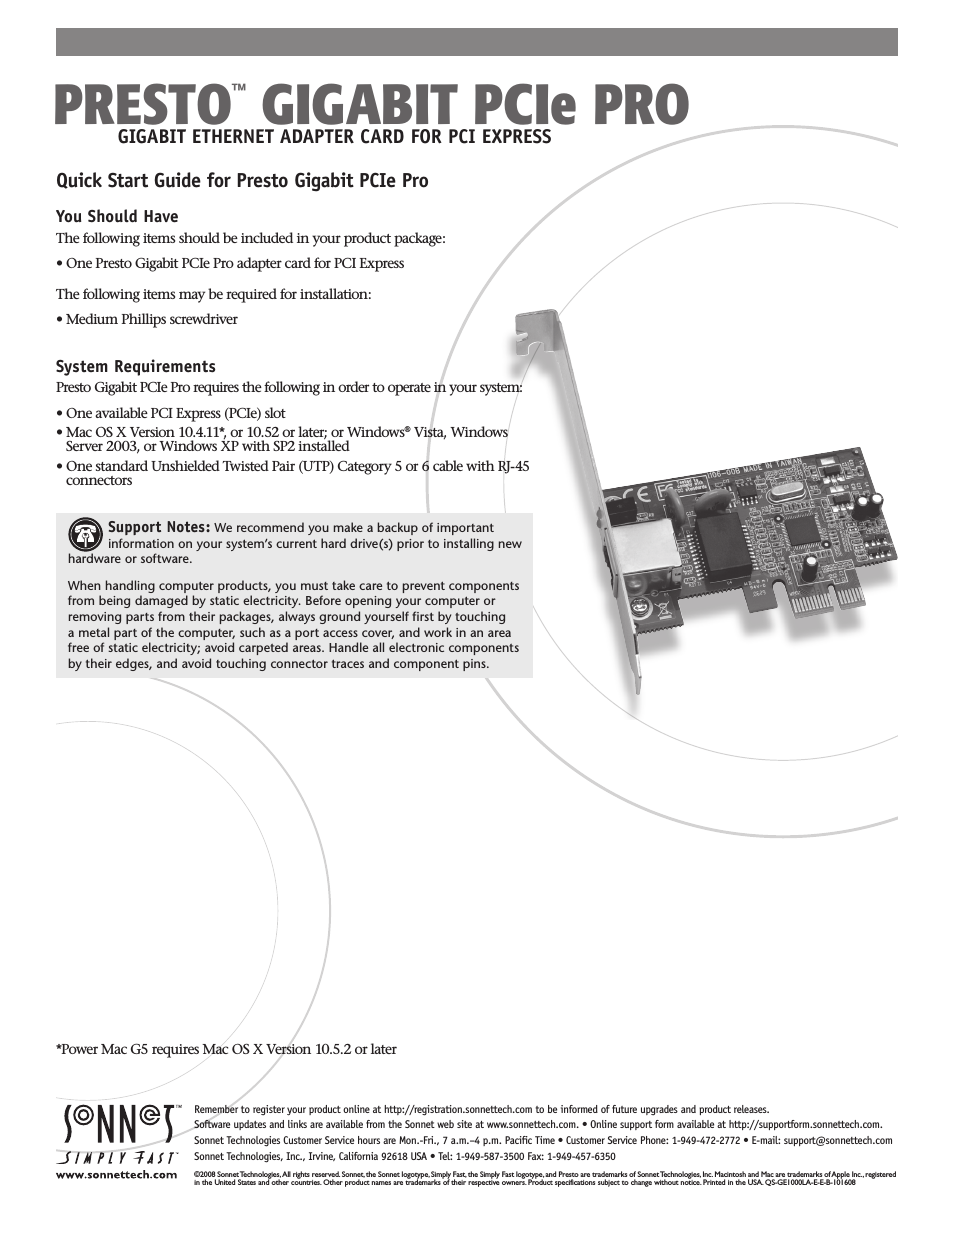 Presto Gigabit PCIe Pro Gigabit Ethernet Adapter Card